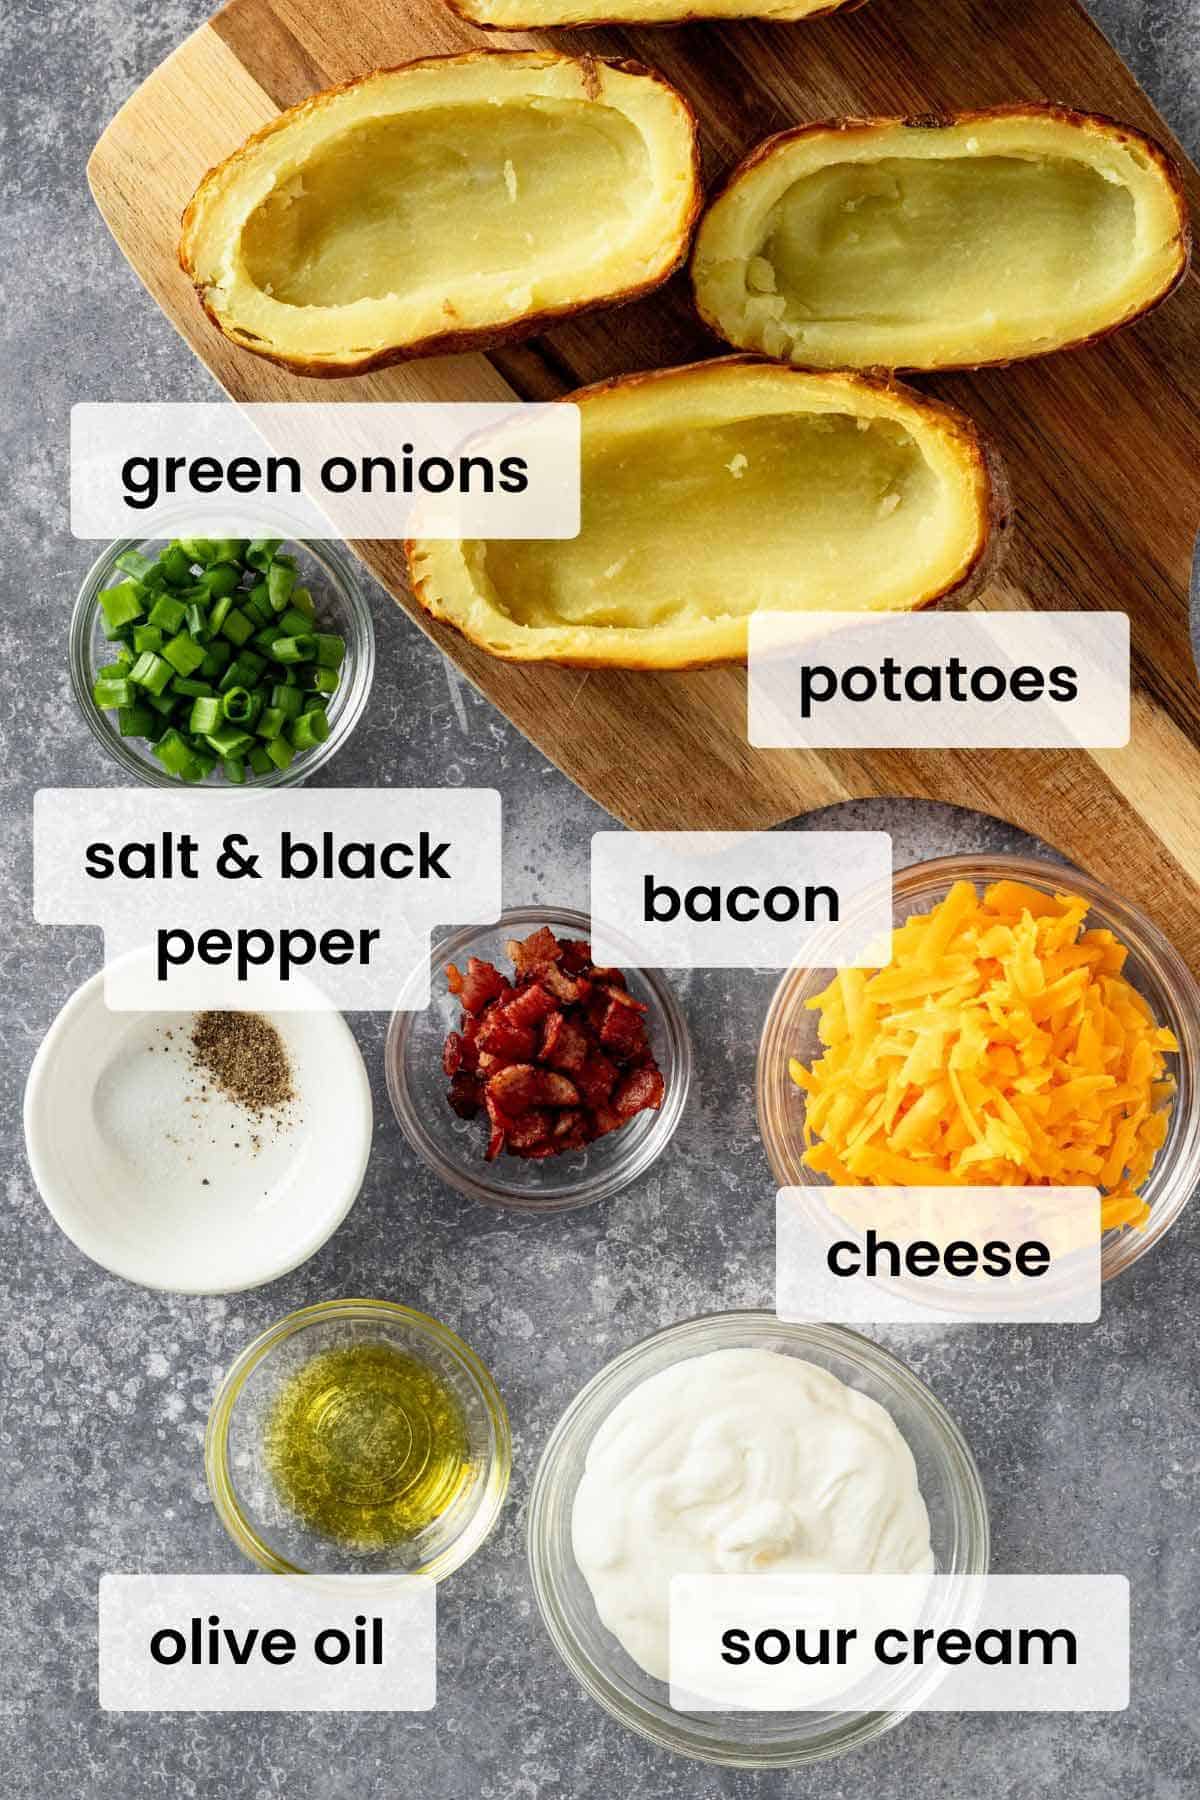 ingredients for potato skins.